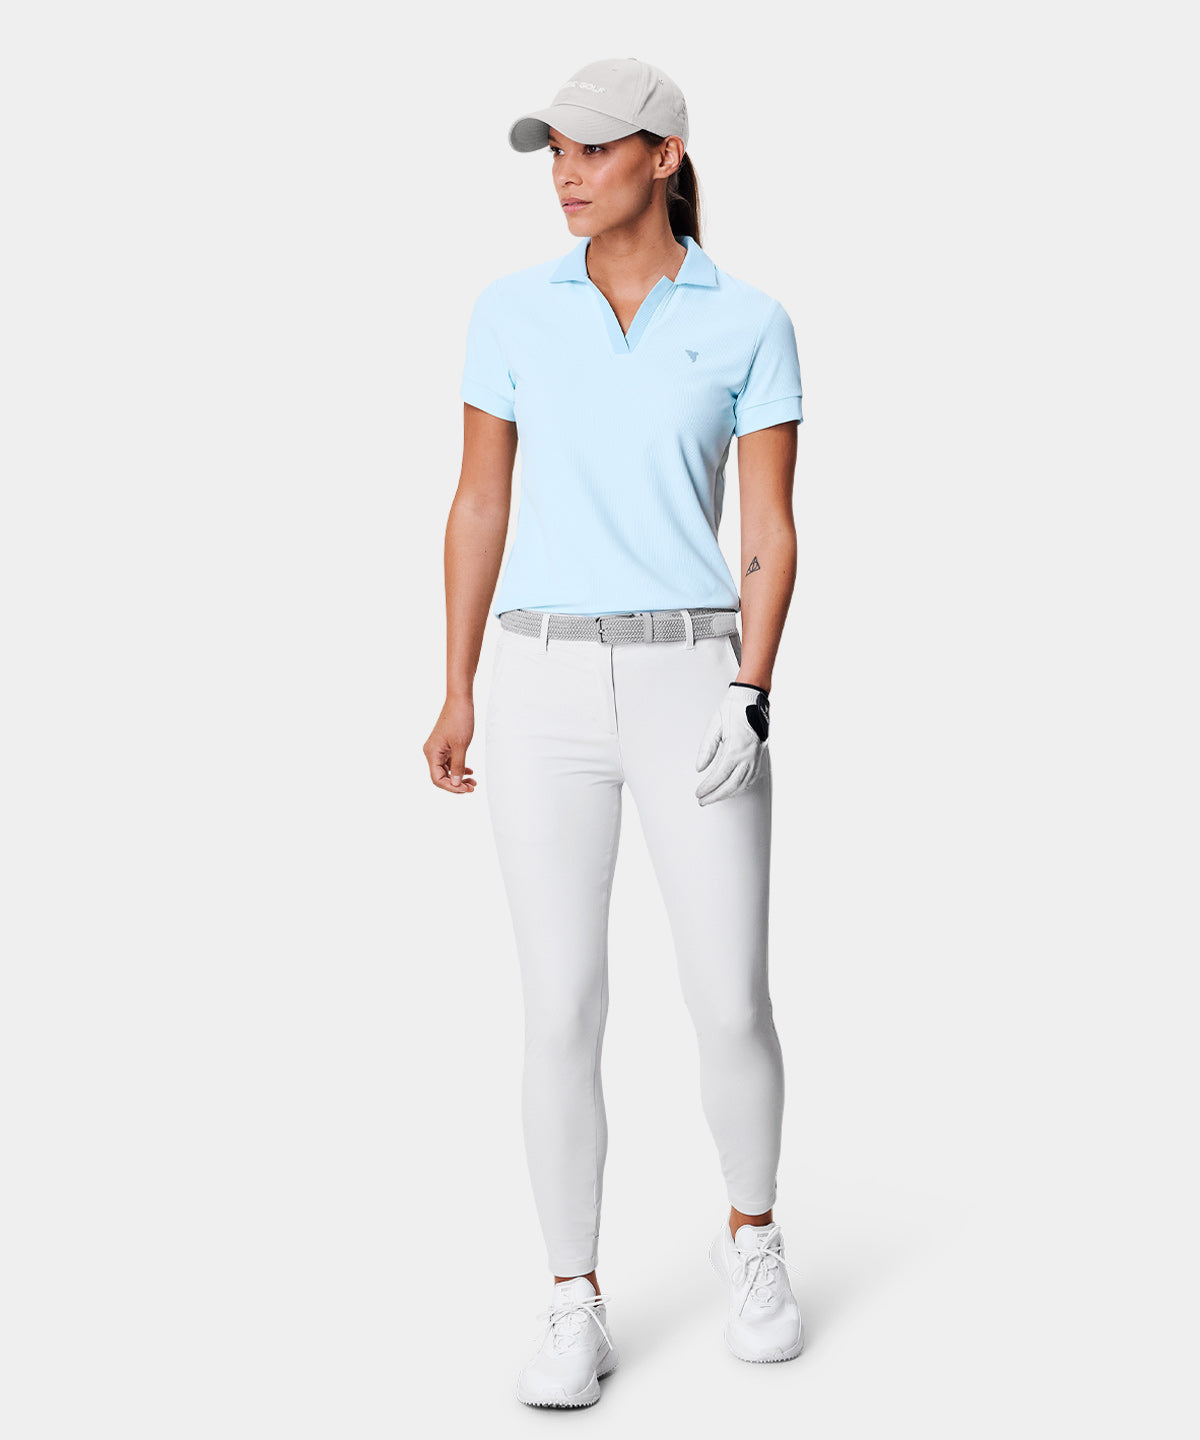 Tori Light Blue Polo Shirt Macade Golf